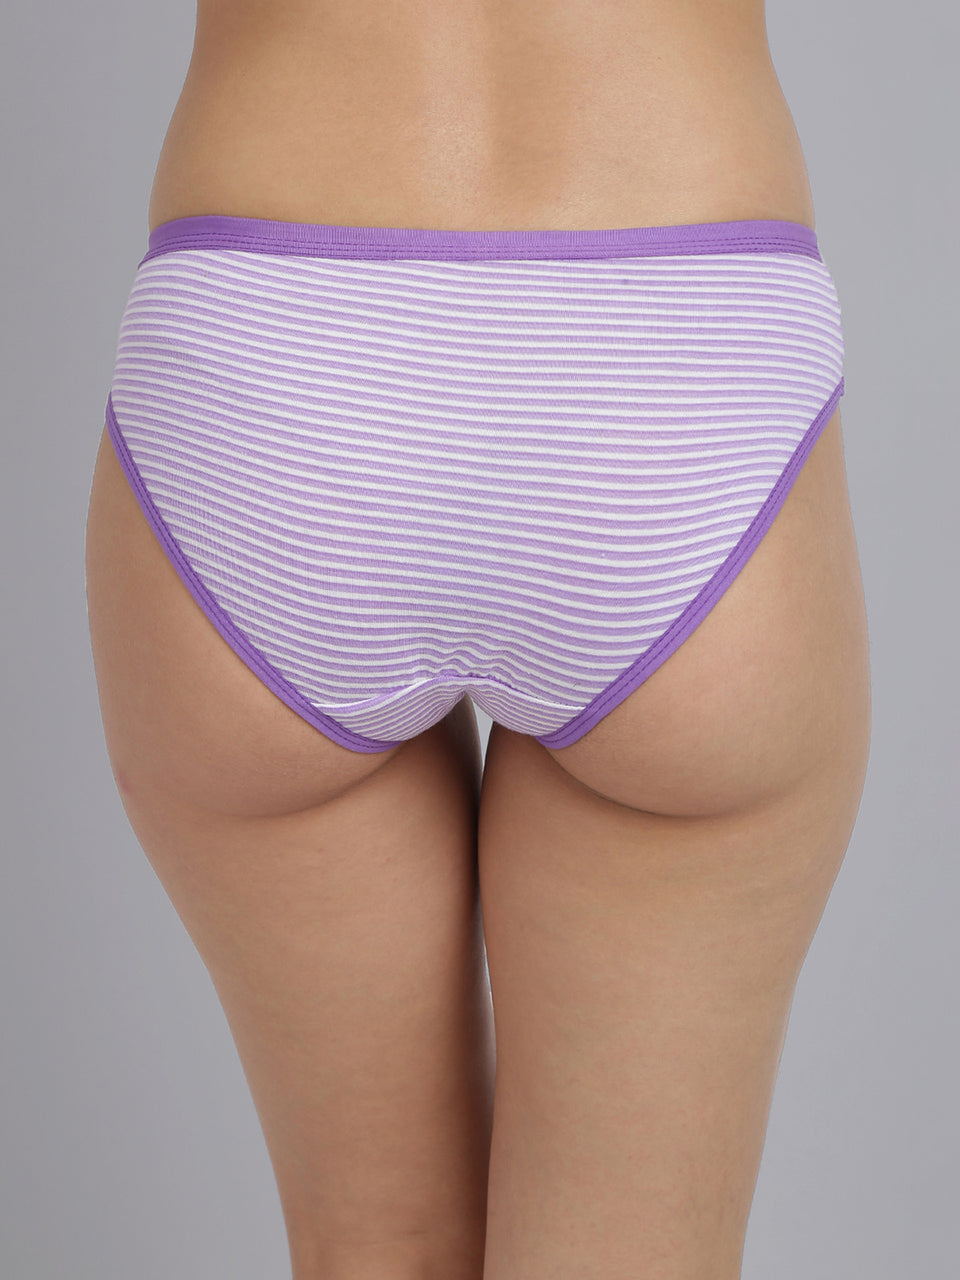 women purple striped cotton panties